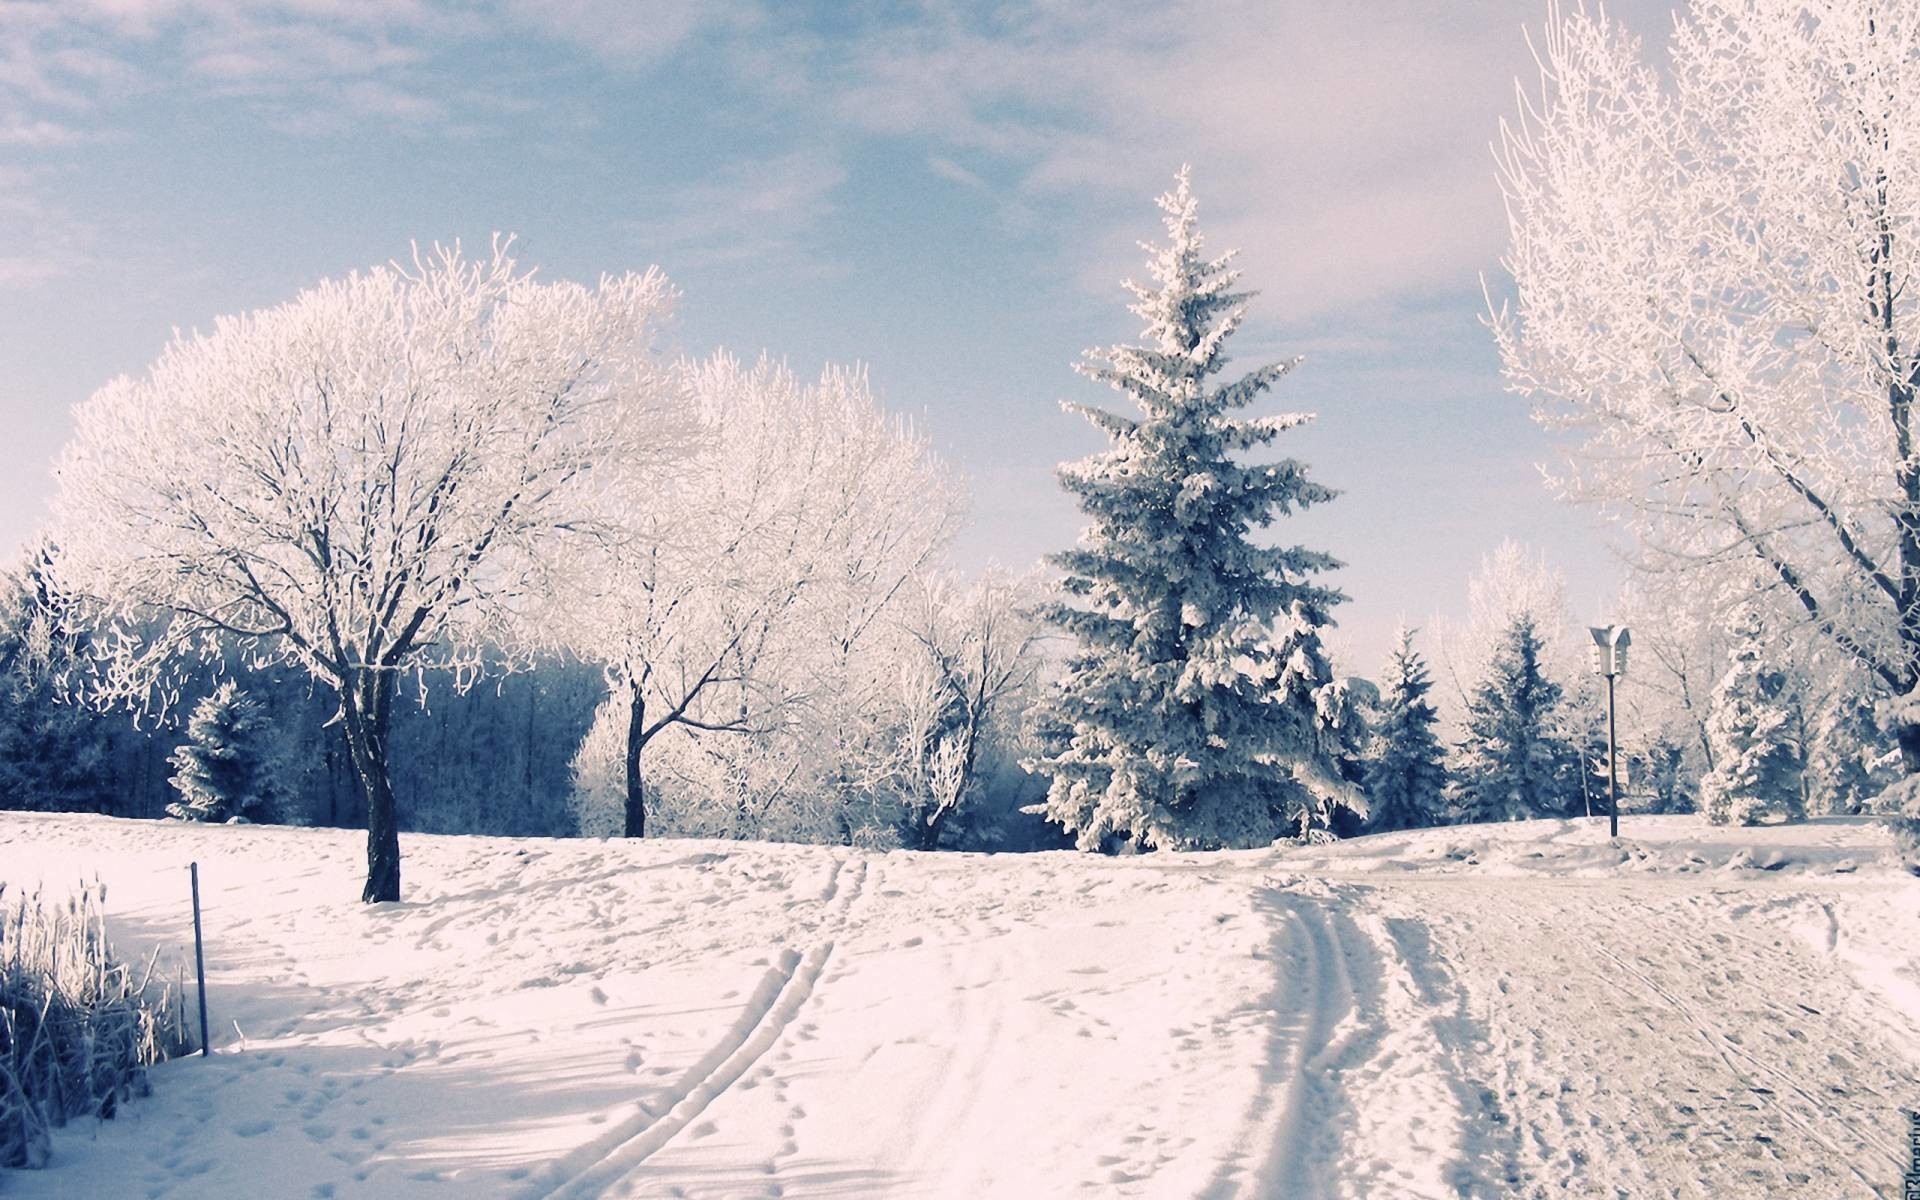 Download 21 winter-wonderland-iphone-wallpaper Winter-iPhone-Wallpapers-28-Cute-Winter-iPhone-Backgrounds-.jpg